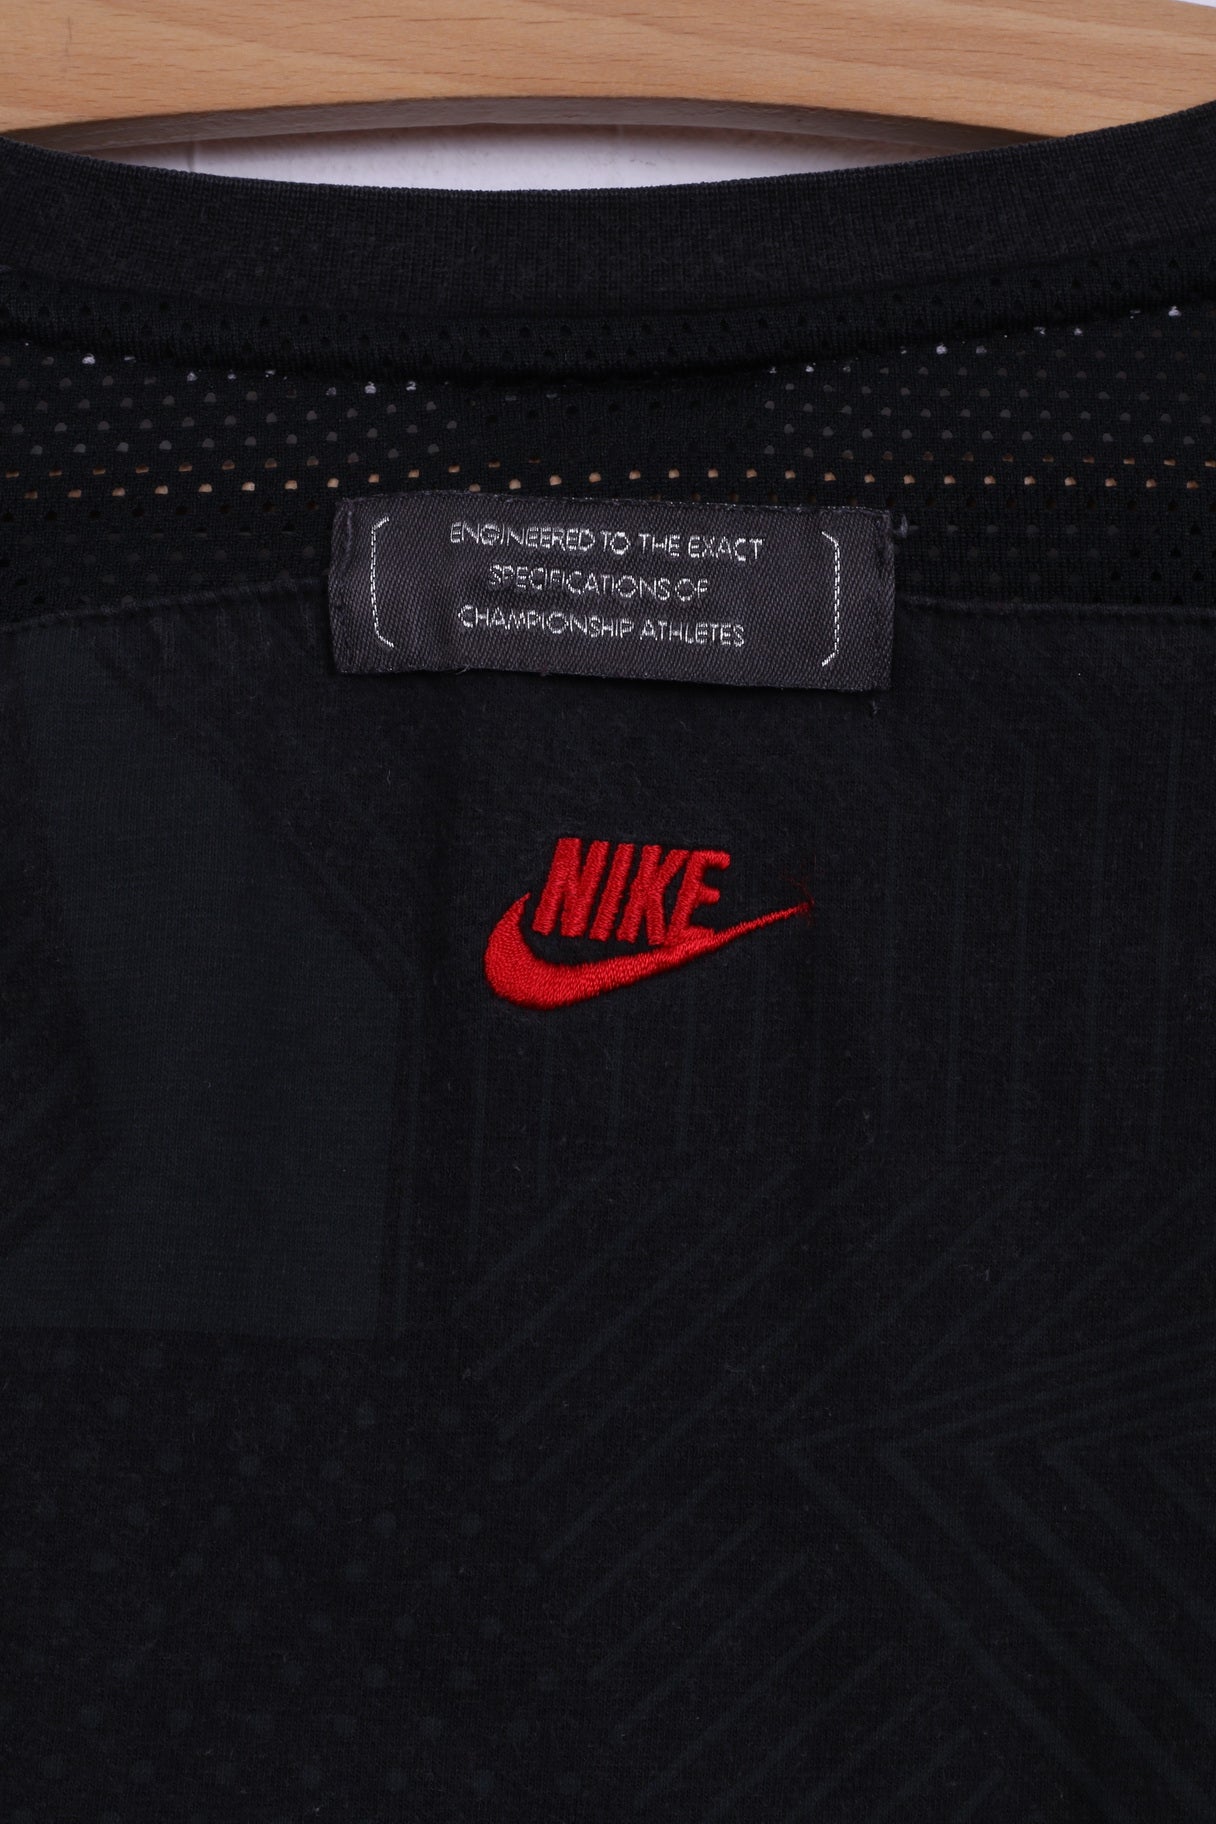 Nike Air Mens L 42/44 Shirt Long Sleeve Black Sportswear Top Cotton